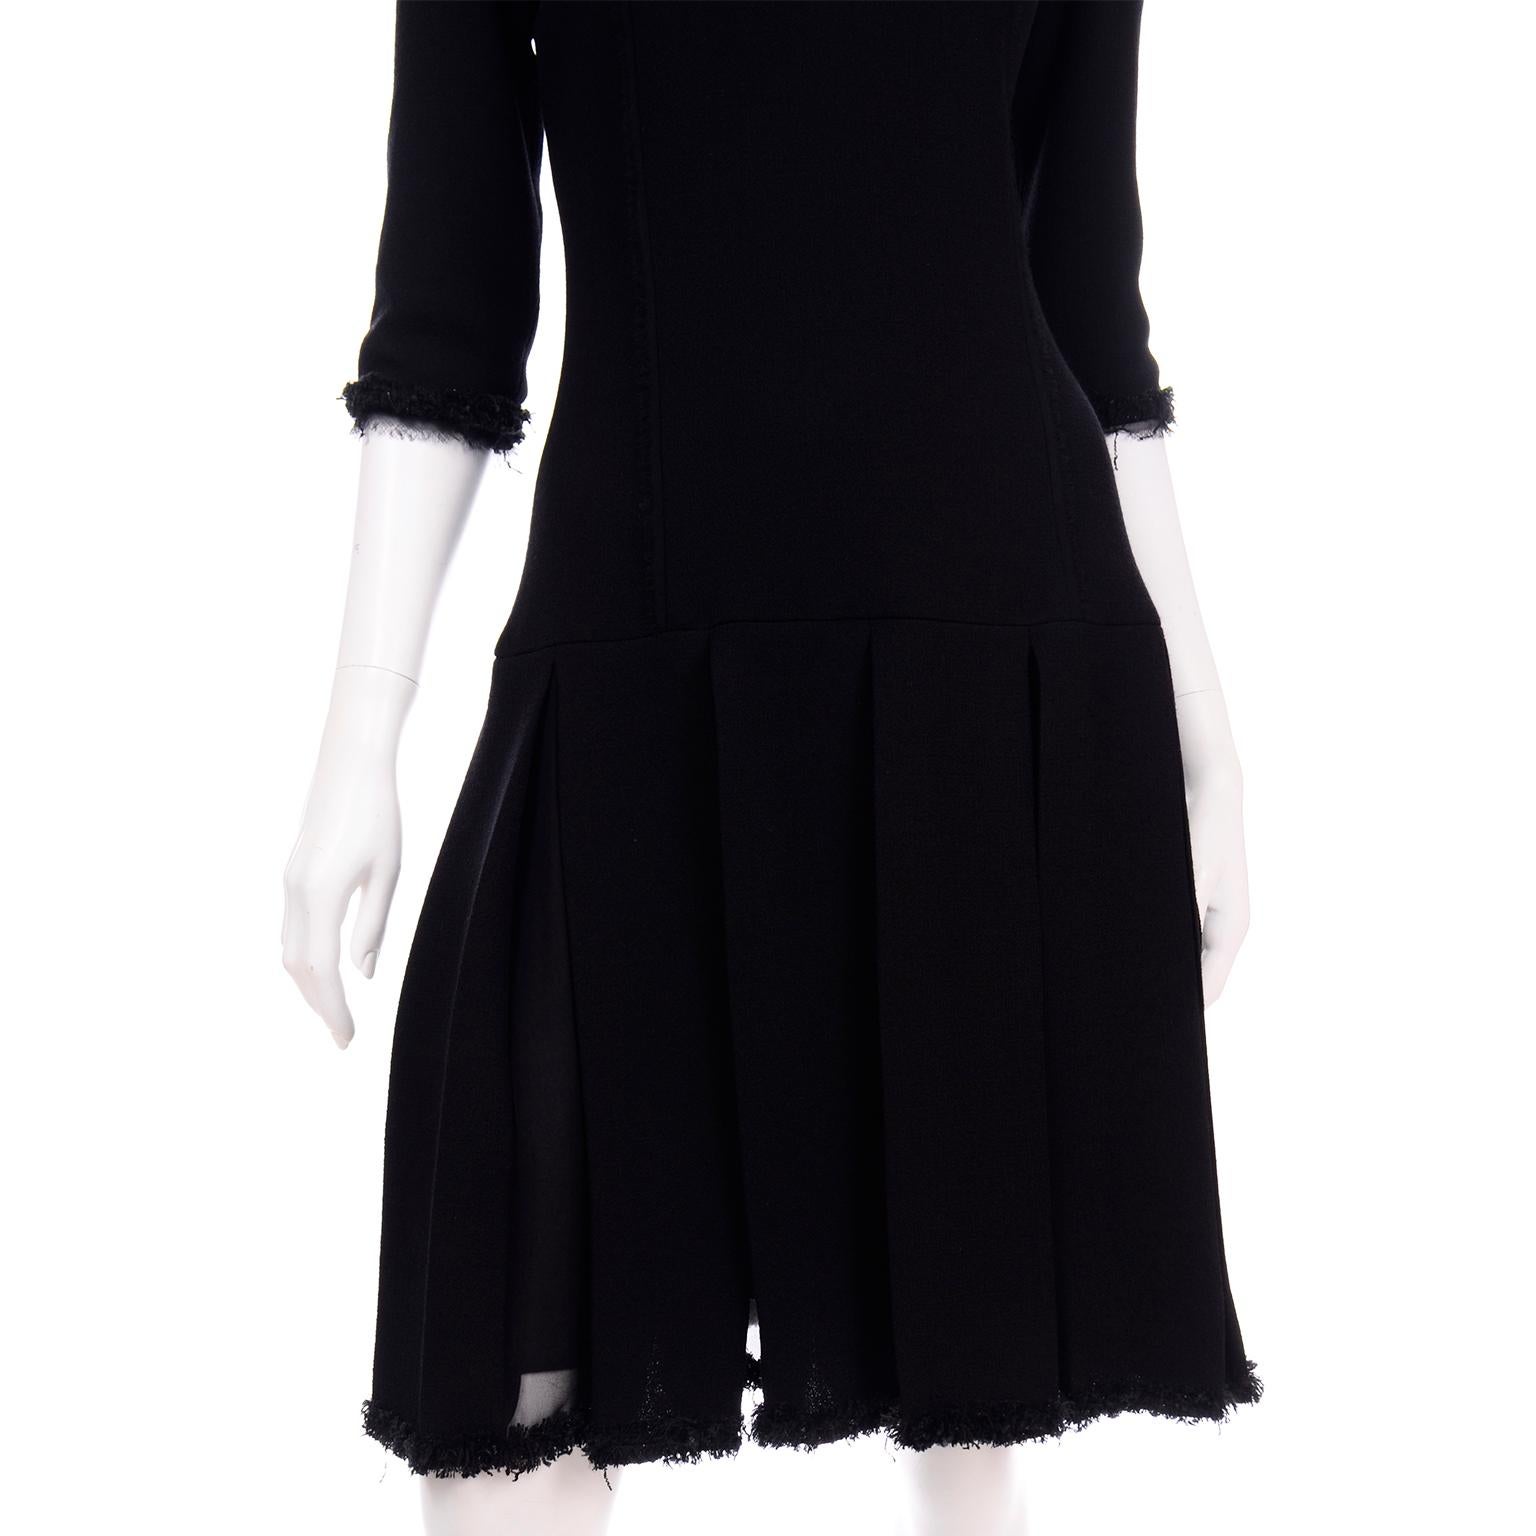 Oscar de la Renta Fall 2010 Black Dress With Raw Edges & Sheer Panel Pleating For Sale 1